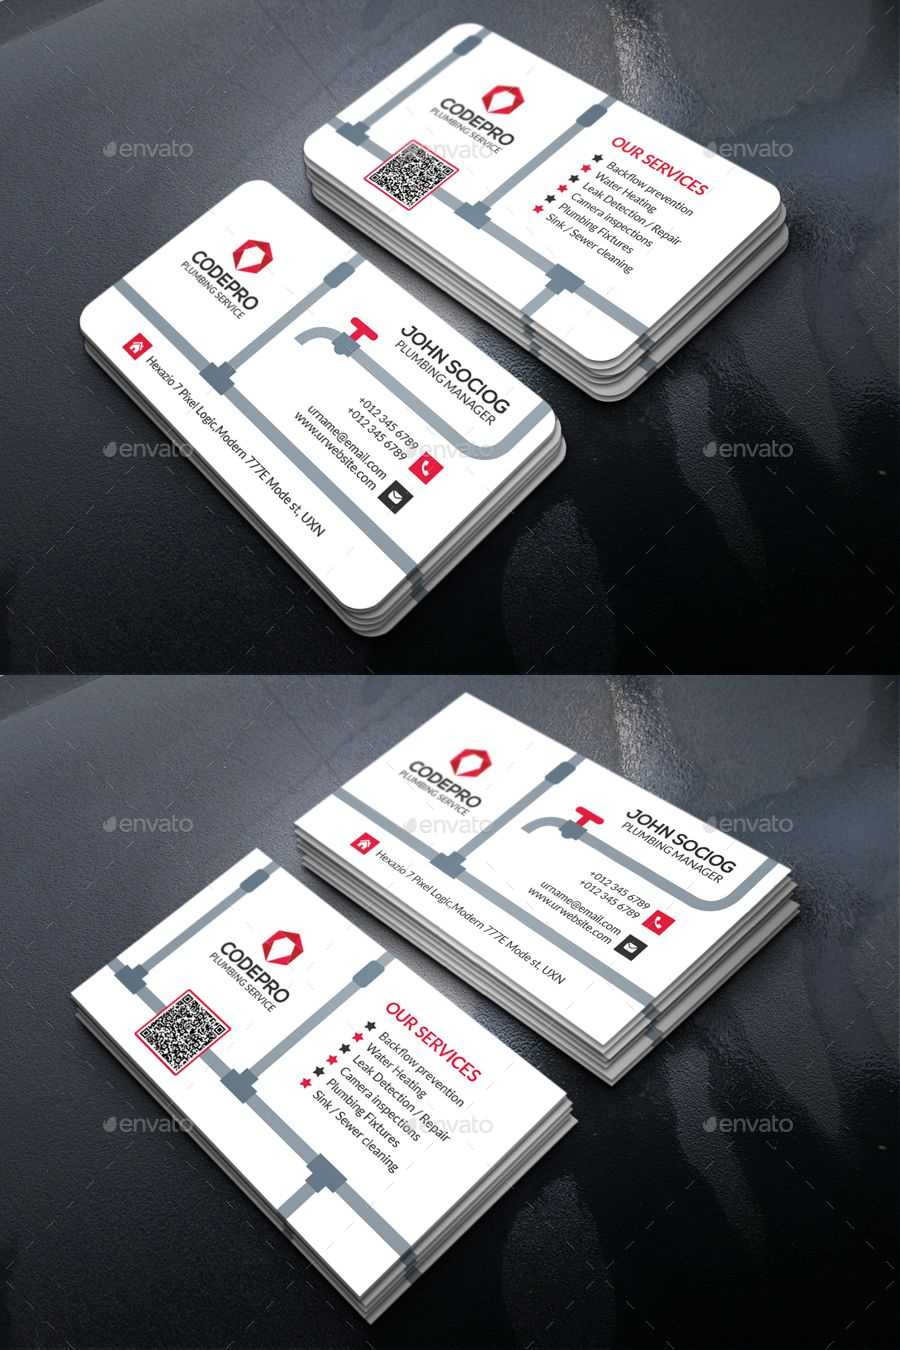 Plumbing Business Card Template Psd | Business Cards Pertaining To Business Card Maker Template